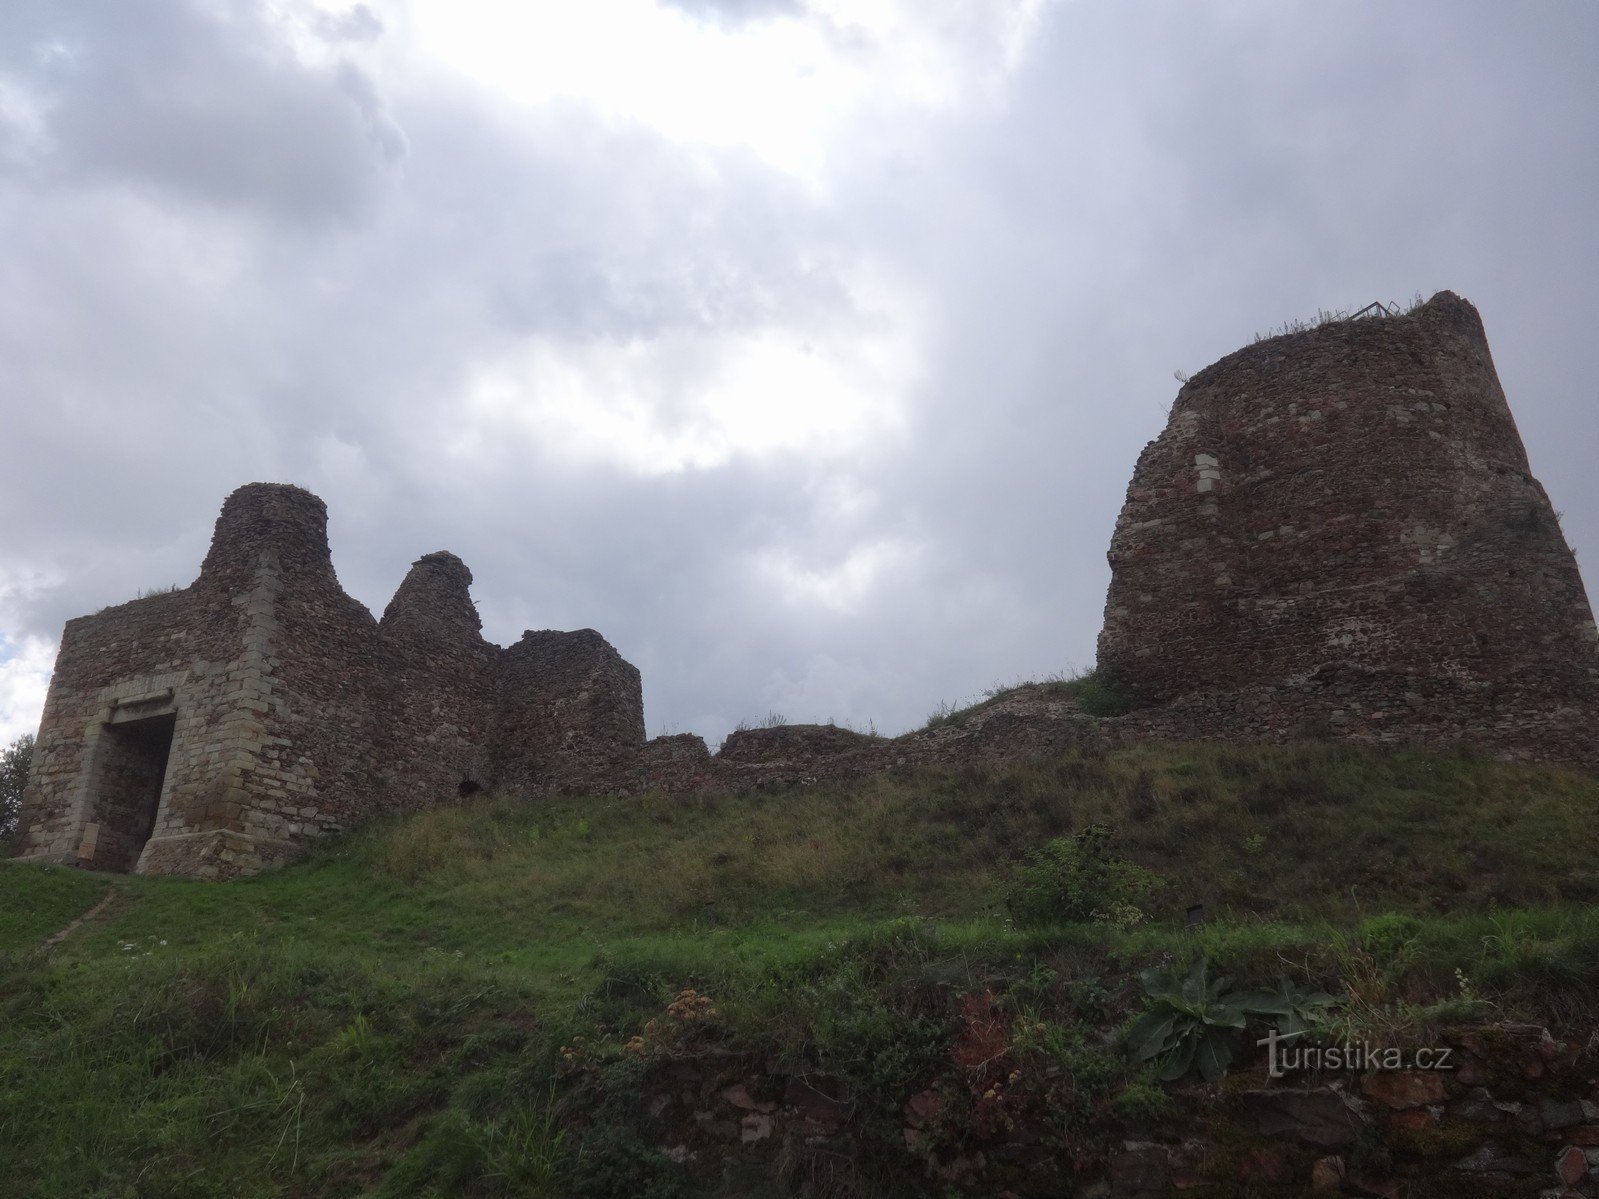 Ruinerna av slottet Lichnice i Iron Mountains